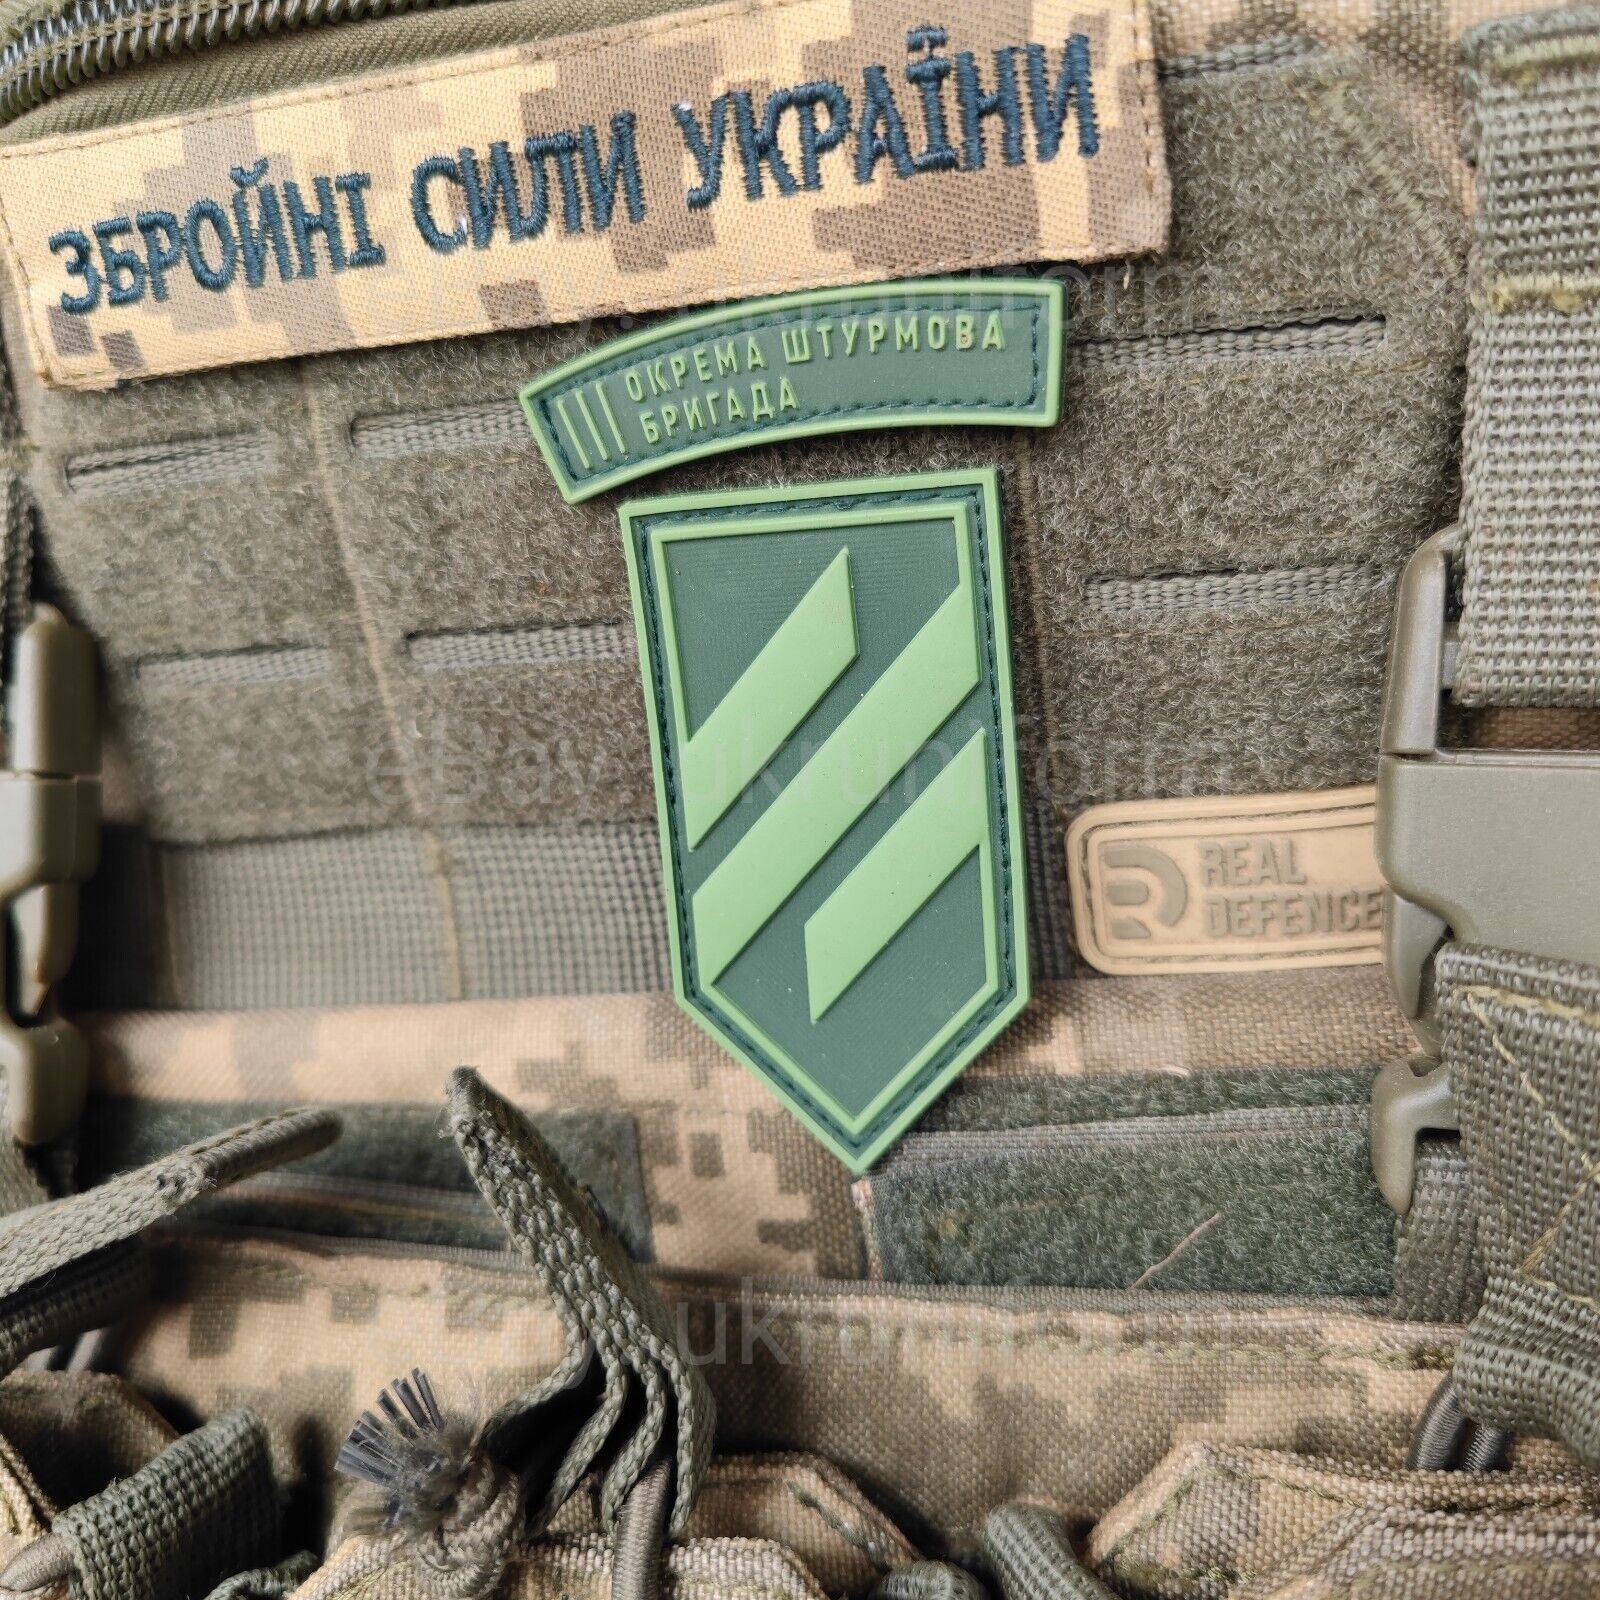 Ukraine Army 3rd Separate Assault Brigade 3D PVC Patch Green Field Type 